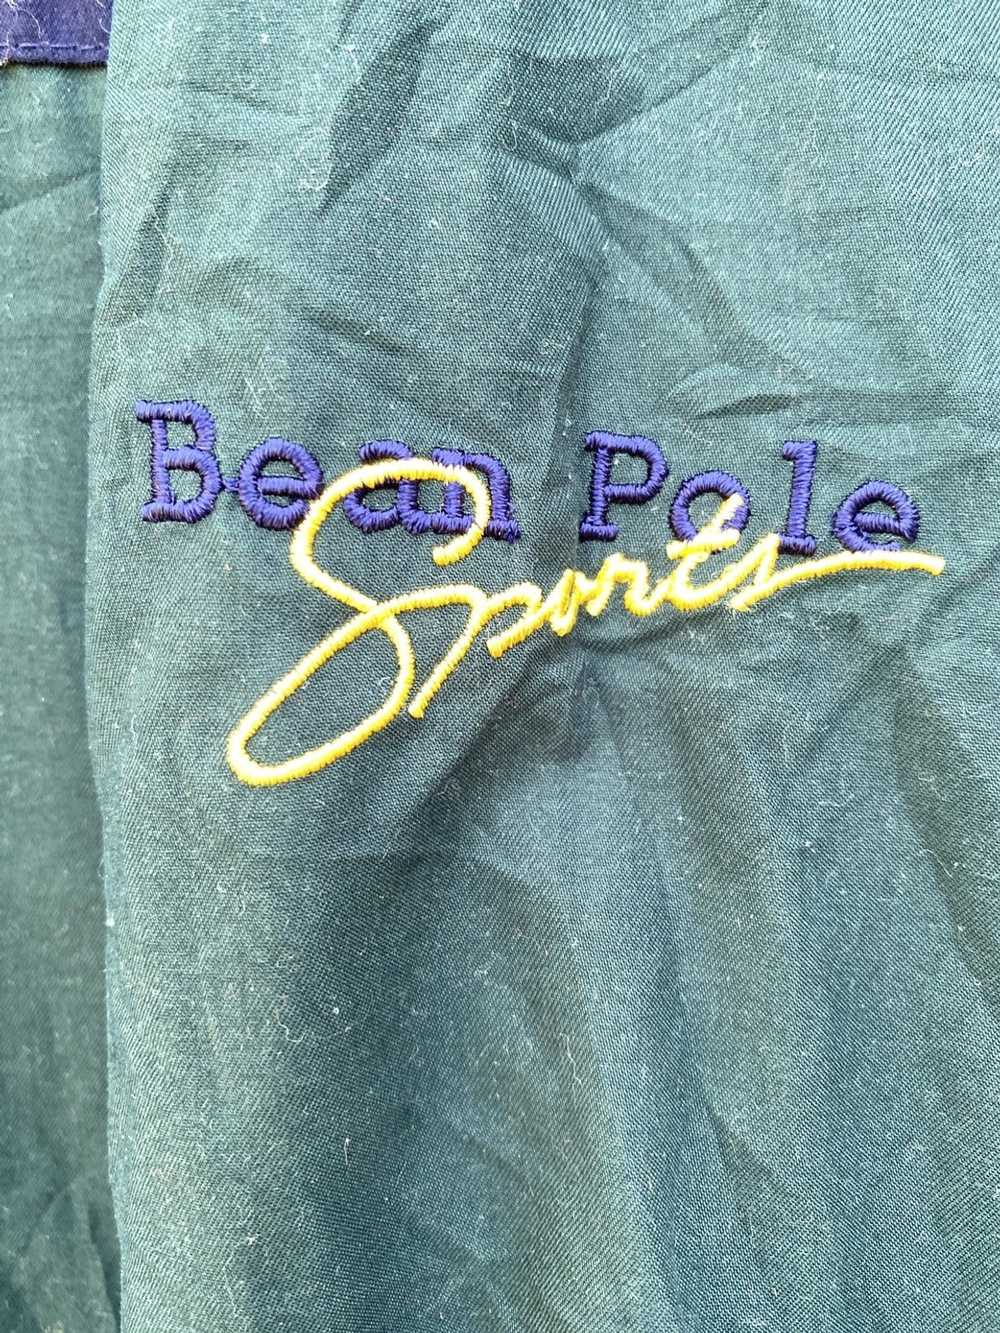 Bean Pole Beam pole hoodie jacket - image 4